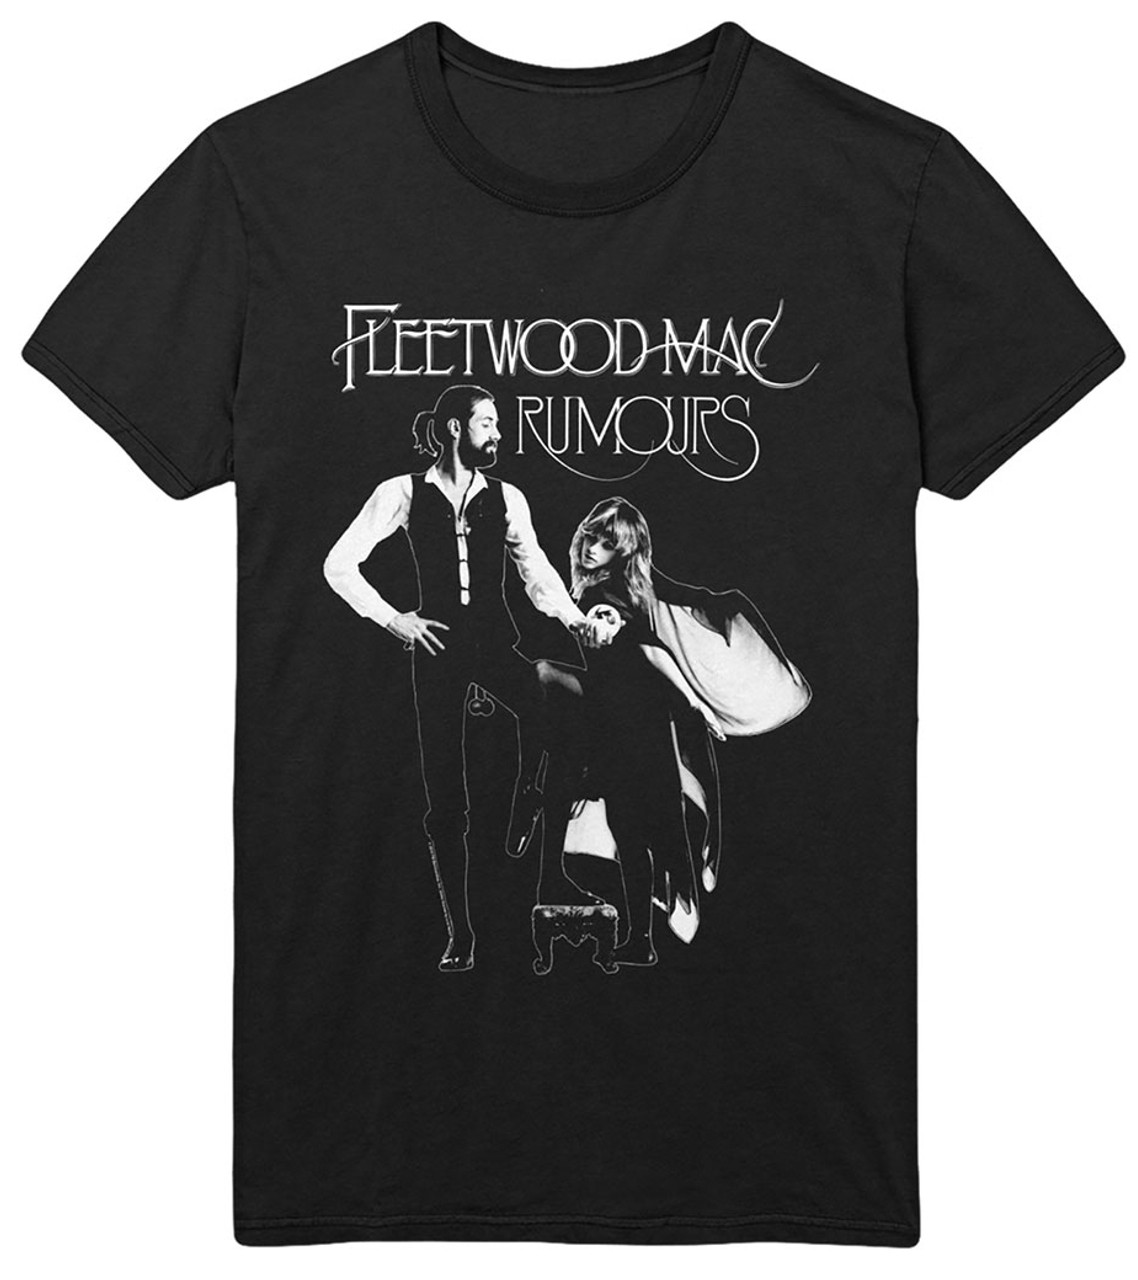 Fleetwood Mac 'Rumours' (Black) T-Shirt